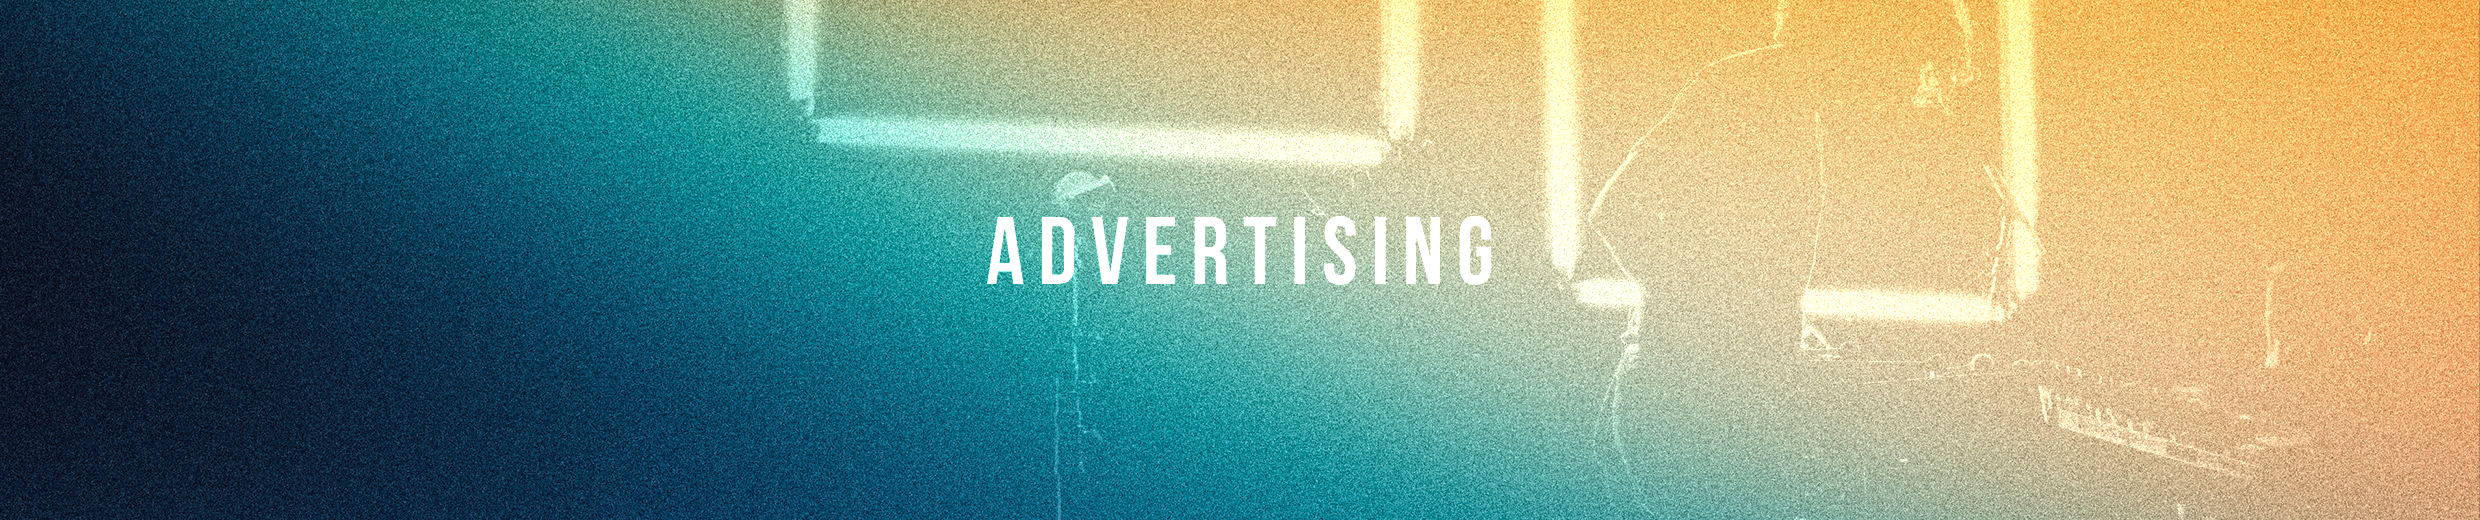 Advertising Header image